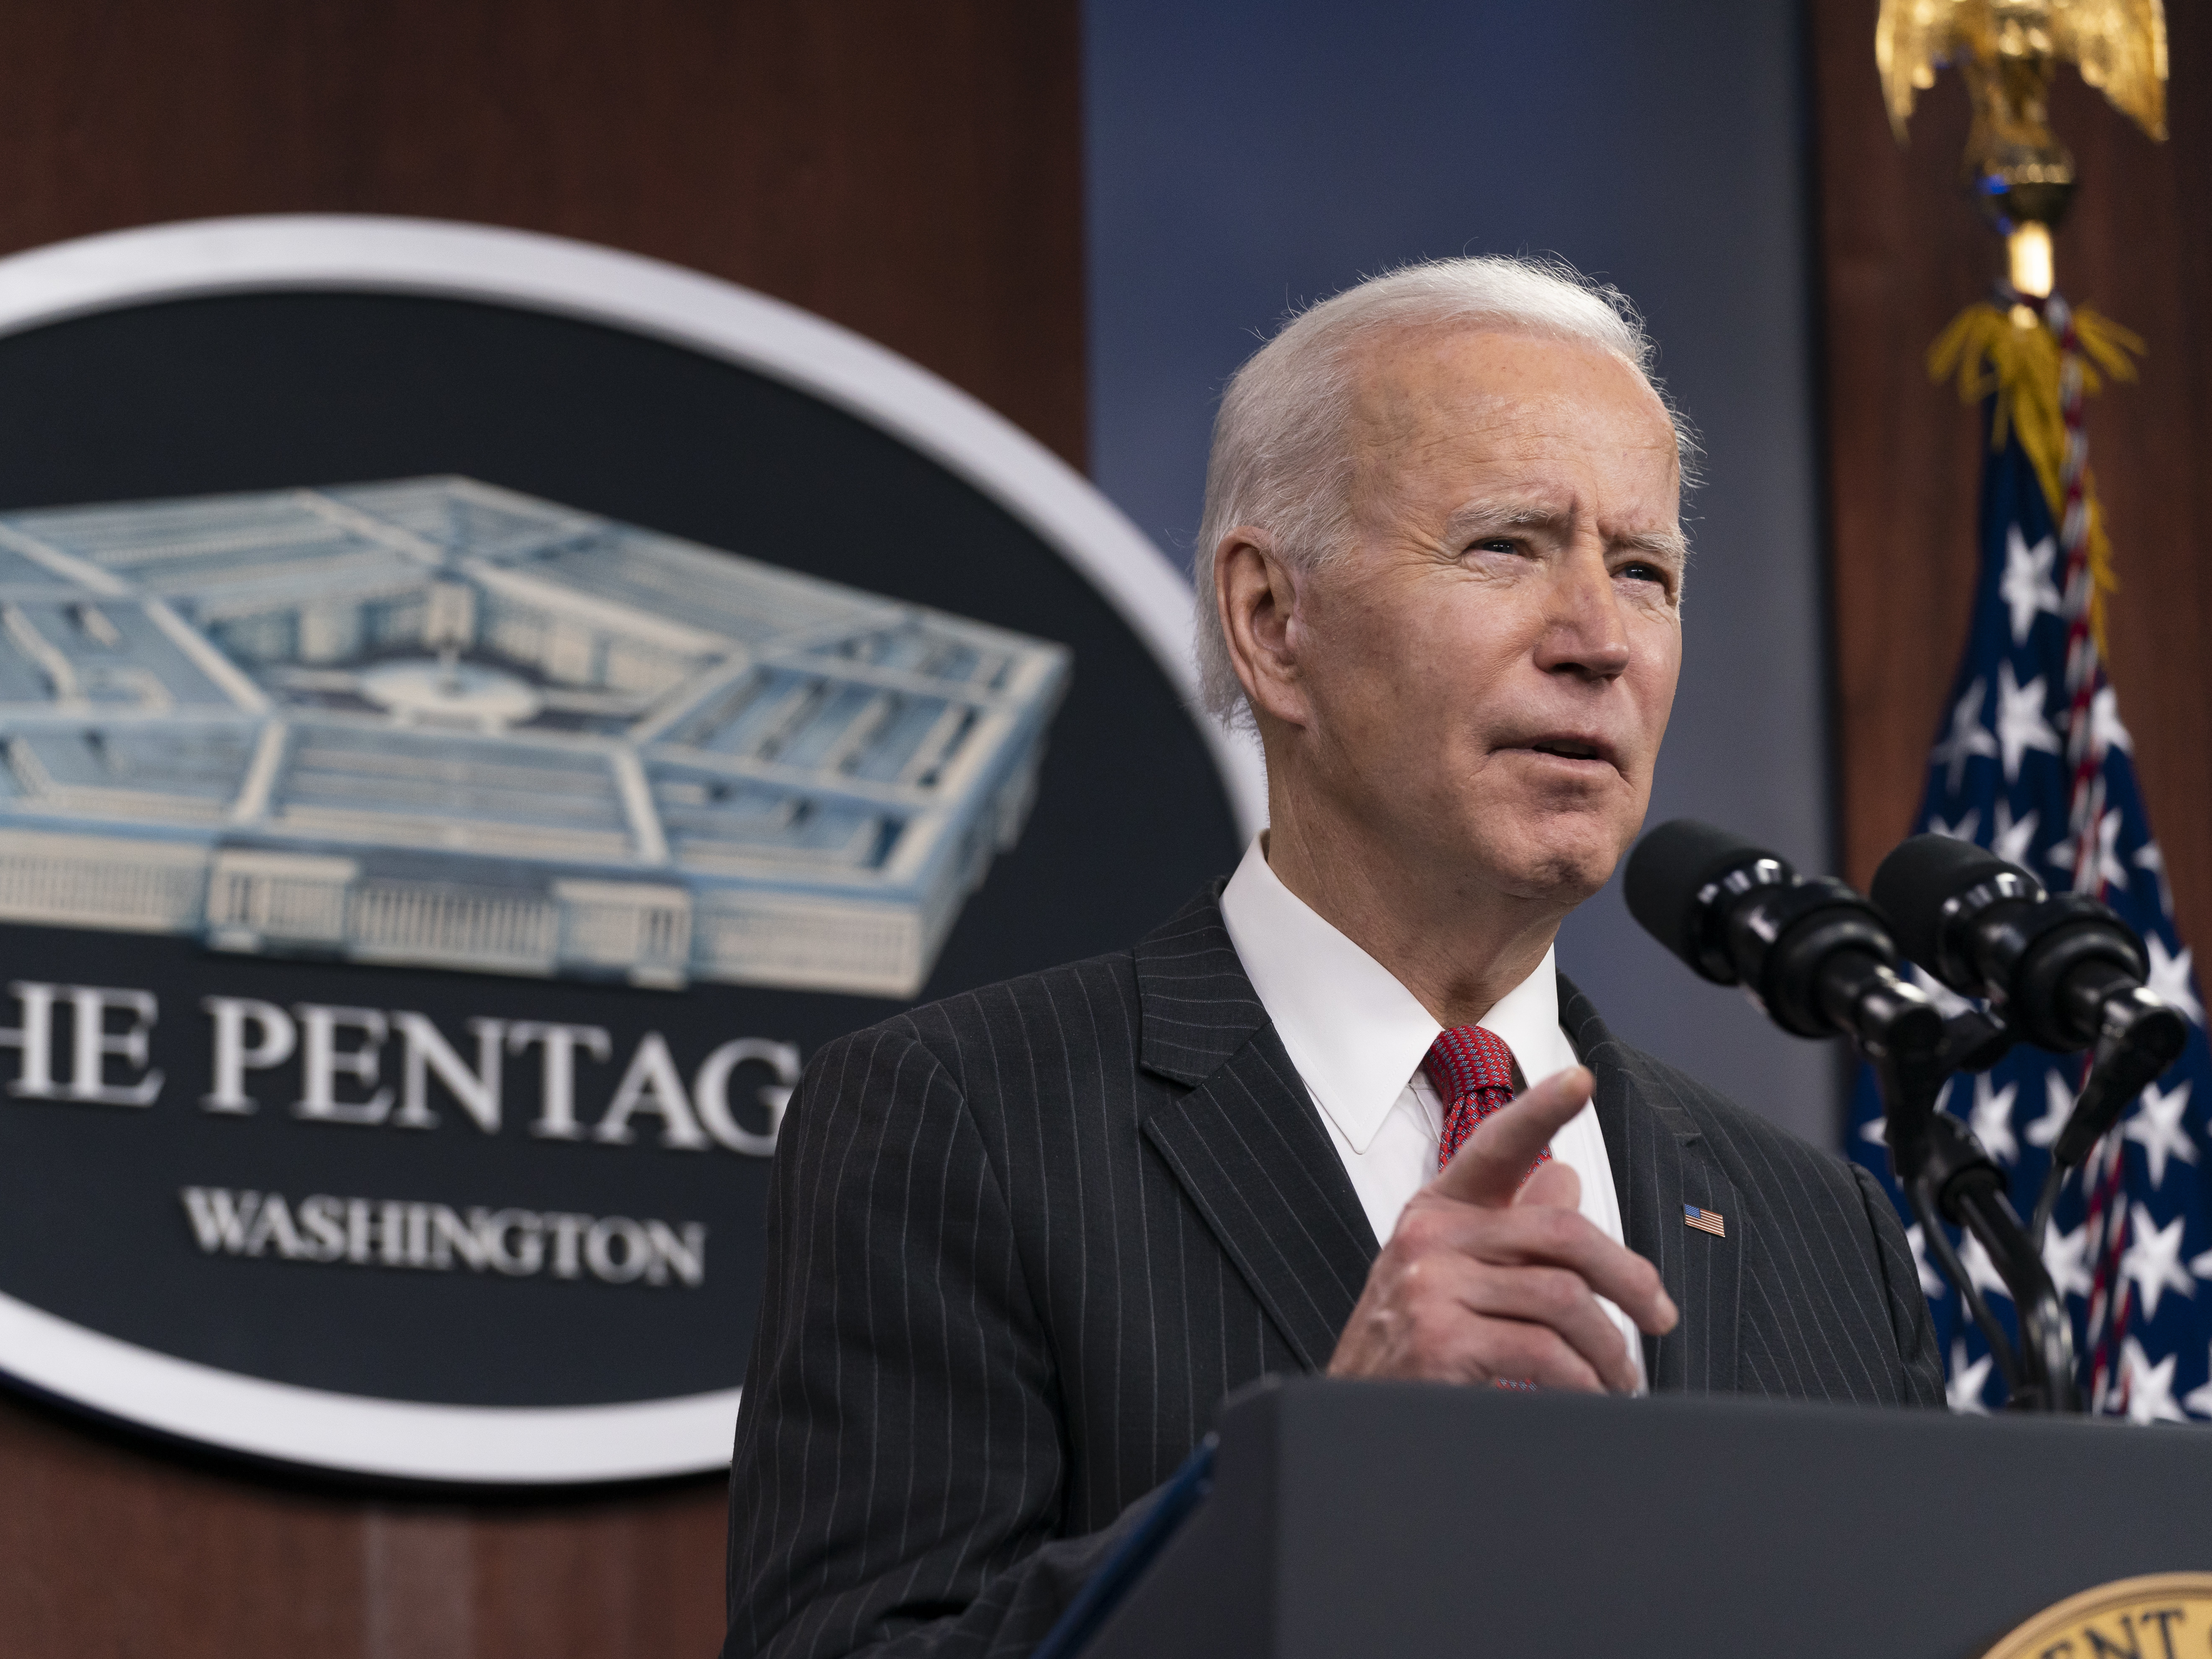 President Joe Biden speaking at the Pentagon